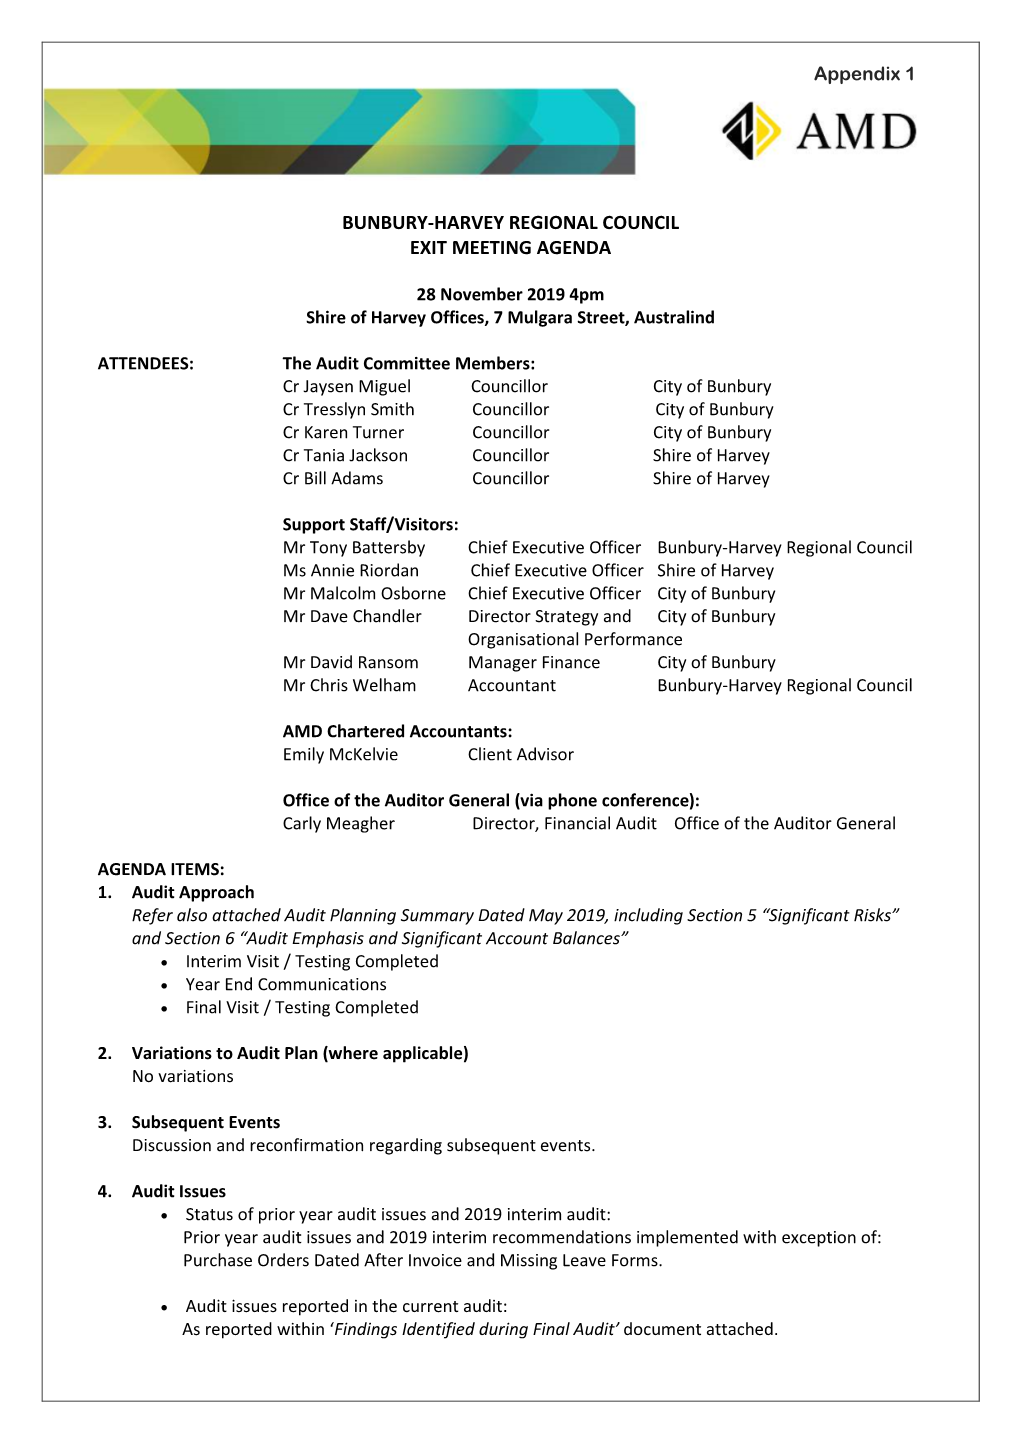 Bunbury-Harvey Regional Council Exit Meeting Agenda